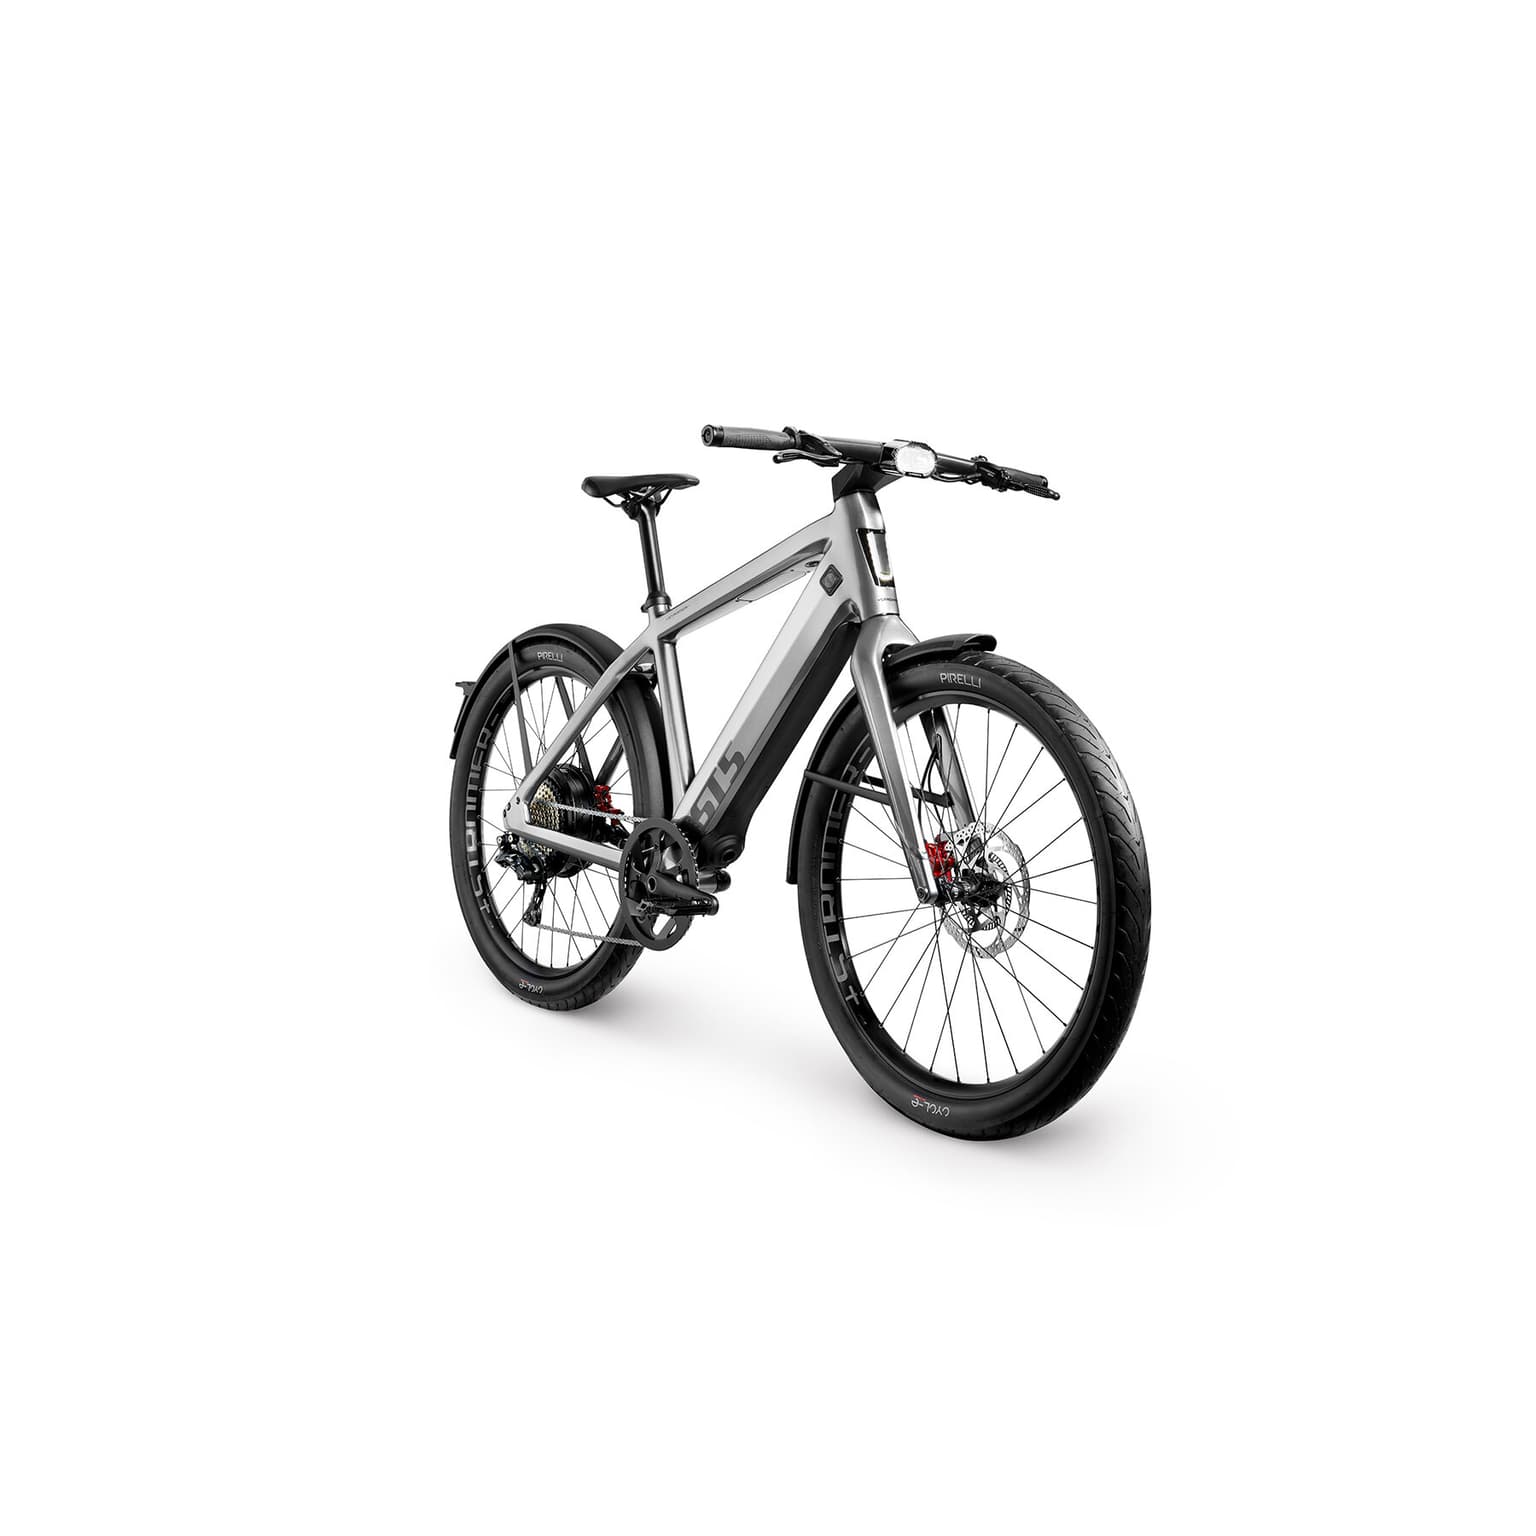 Stromer Stromer ST5 ABS Sport Bicicletta elettrica 45km/h grigio-scuro 2